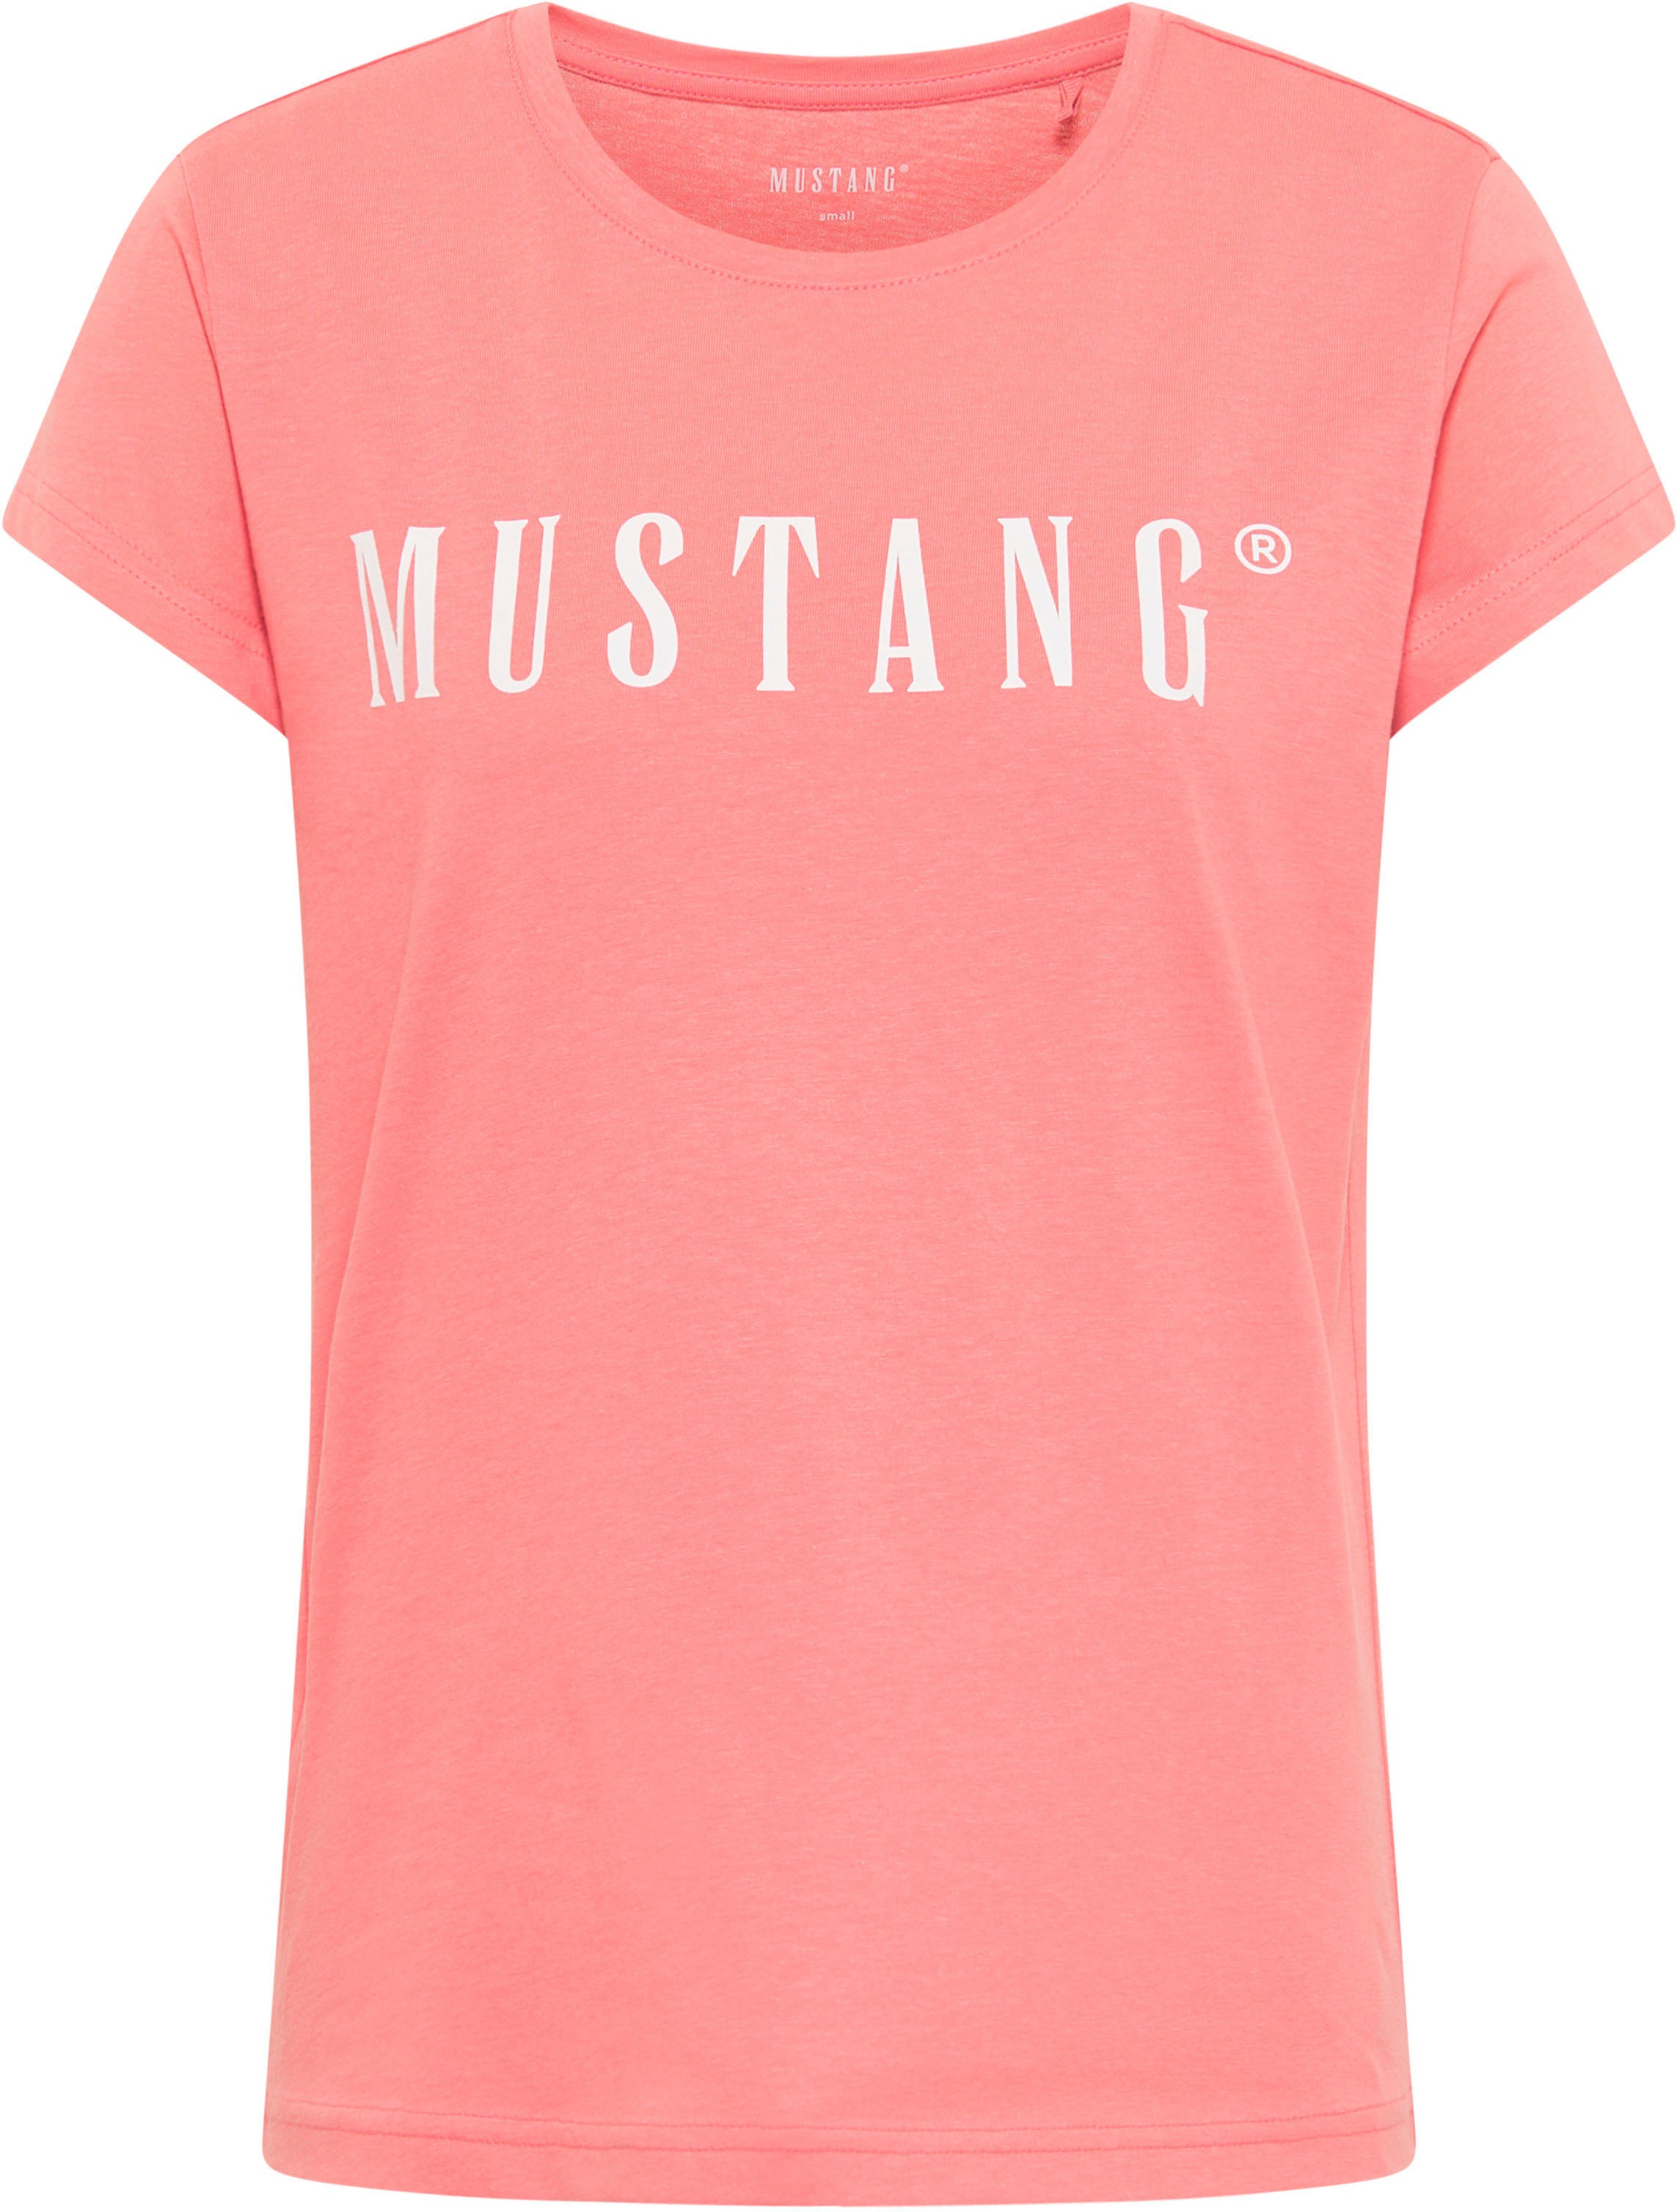 MUSTANG T-Shirt bestellen »Alina« | BAUR für